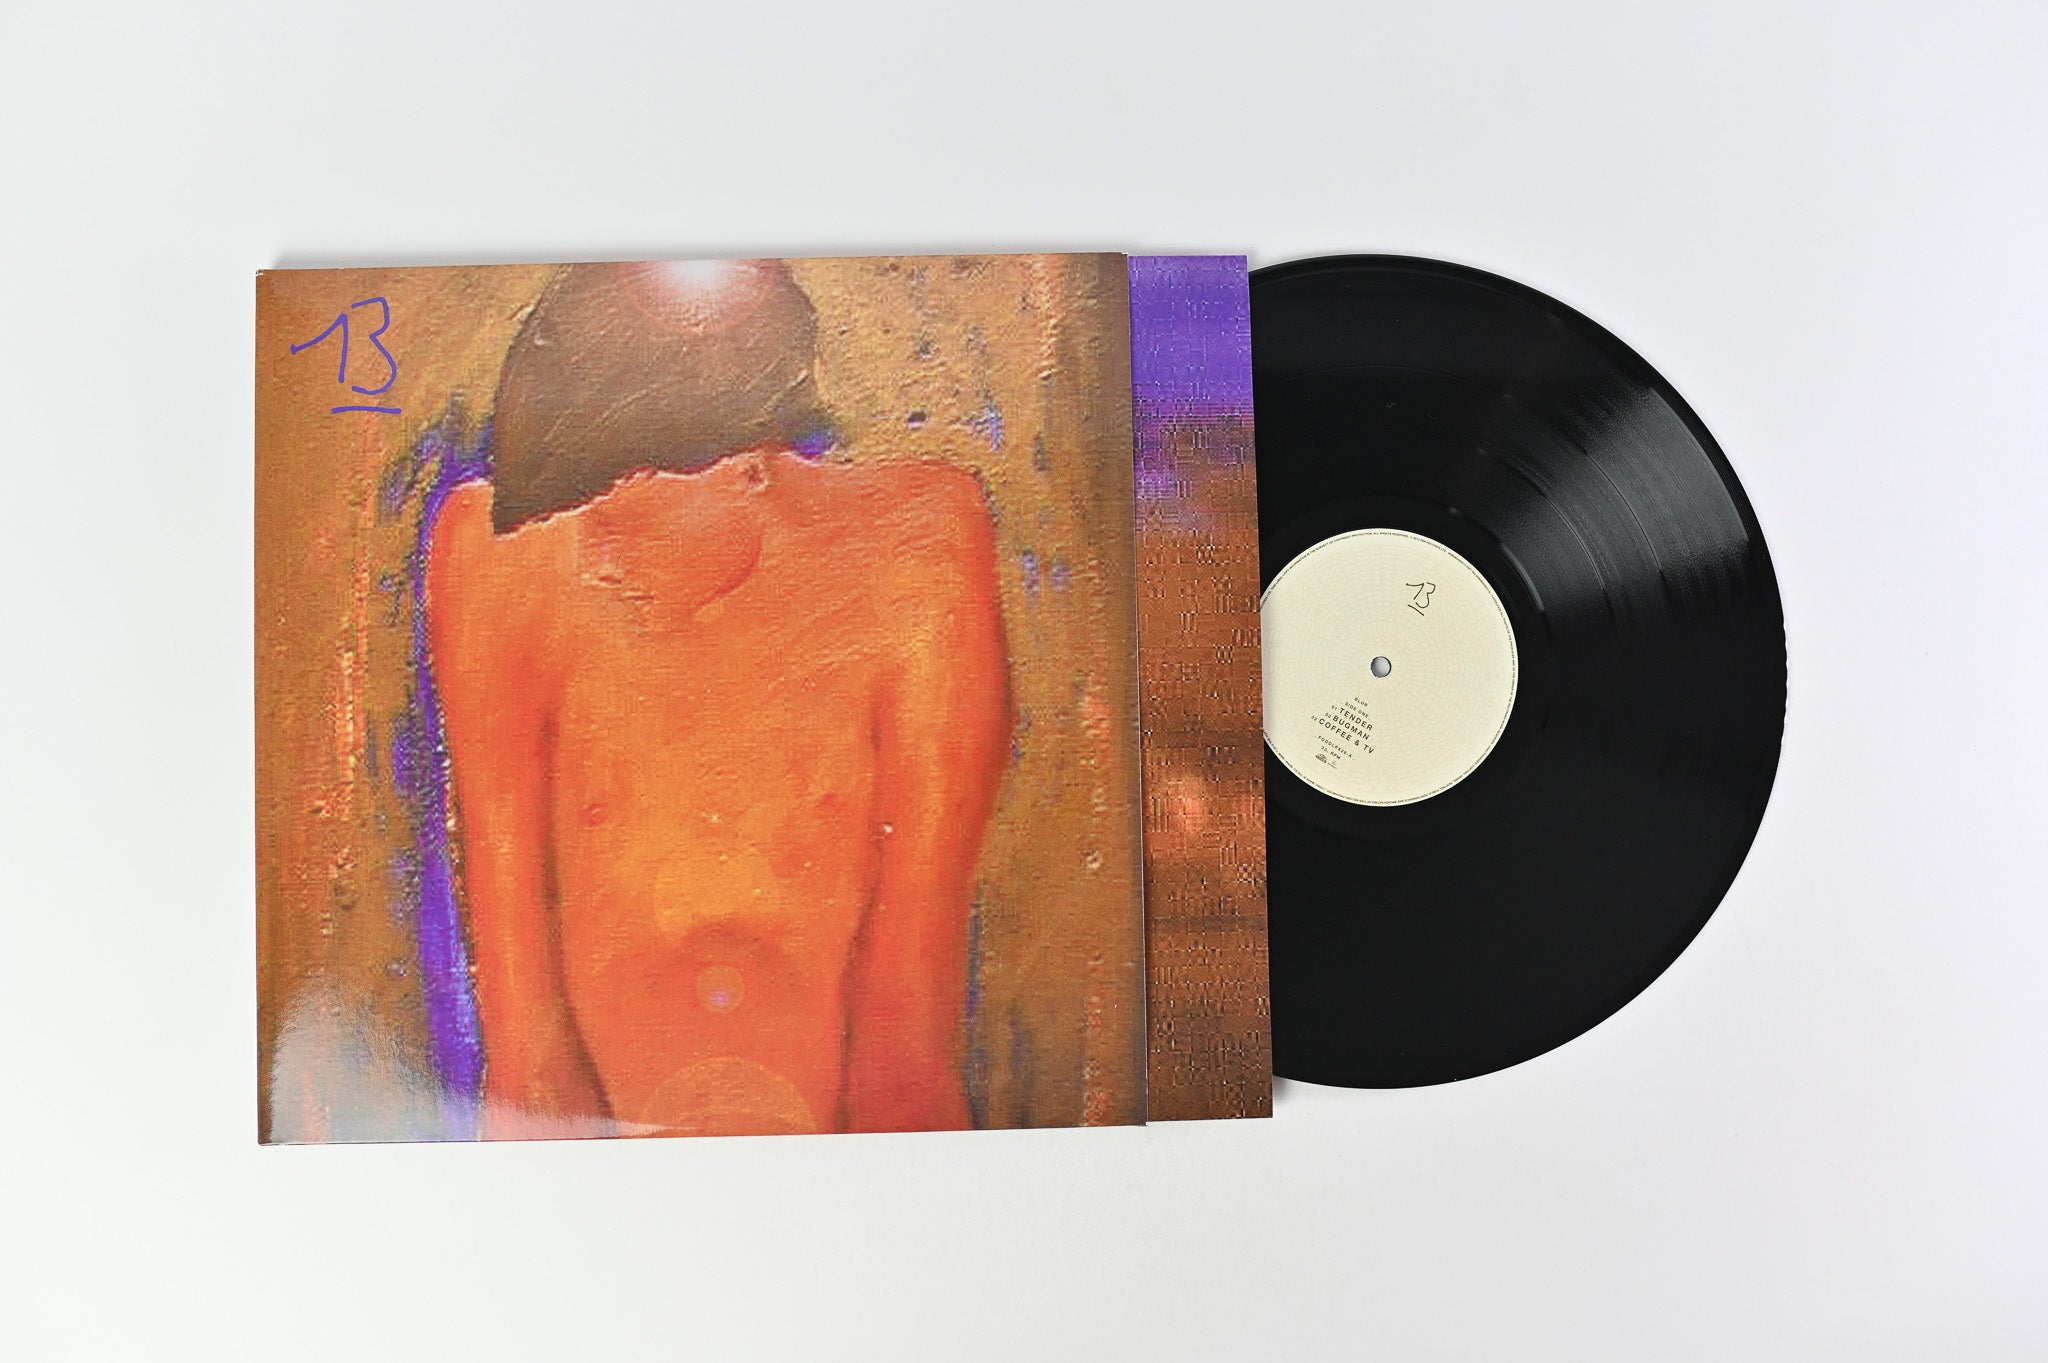 Blur - 13 on Parlophone UK Reissue